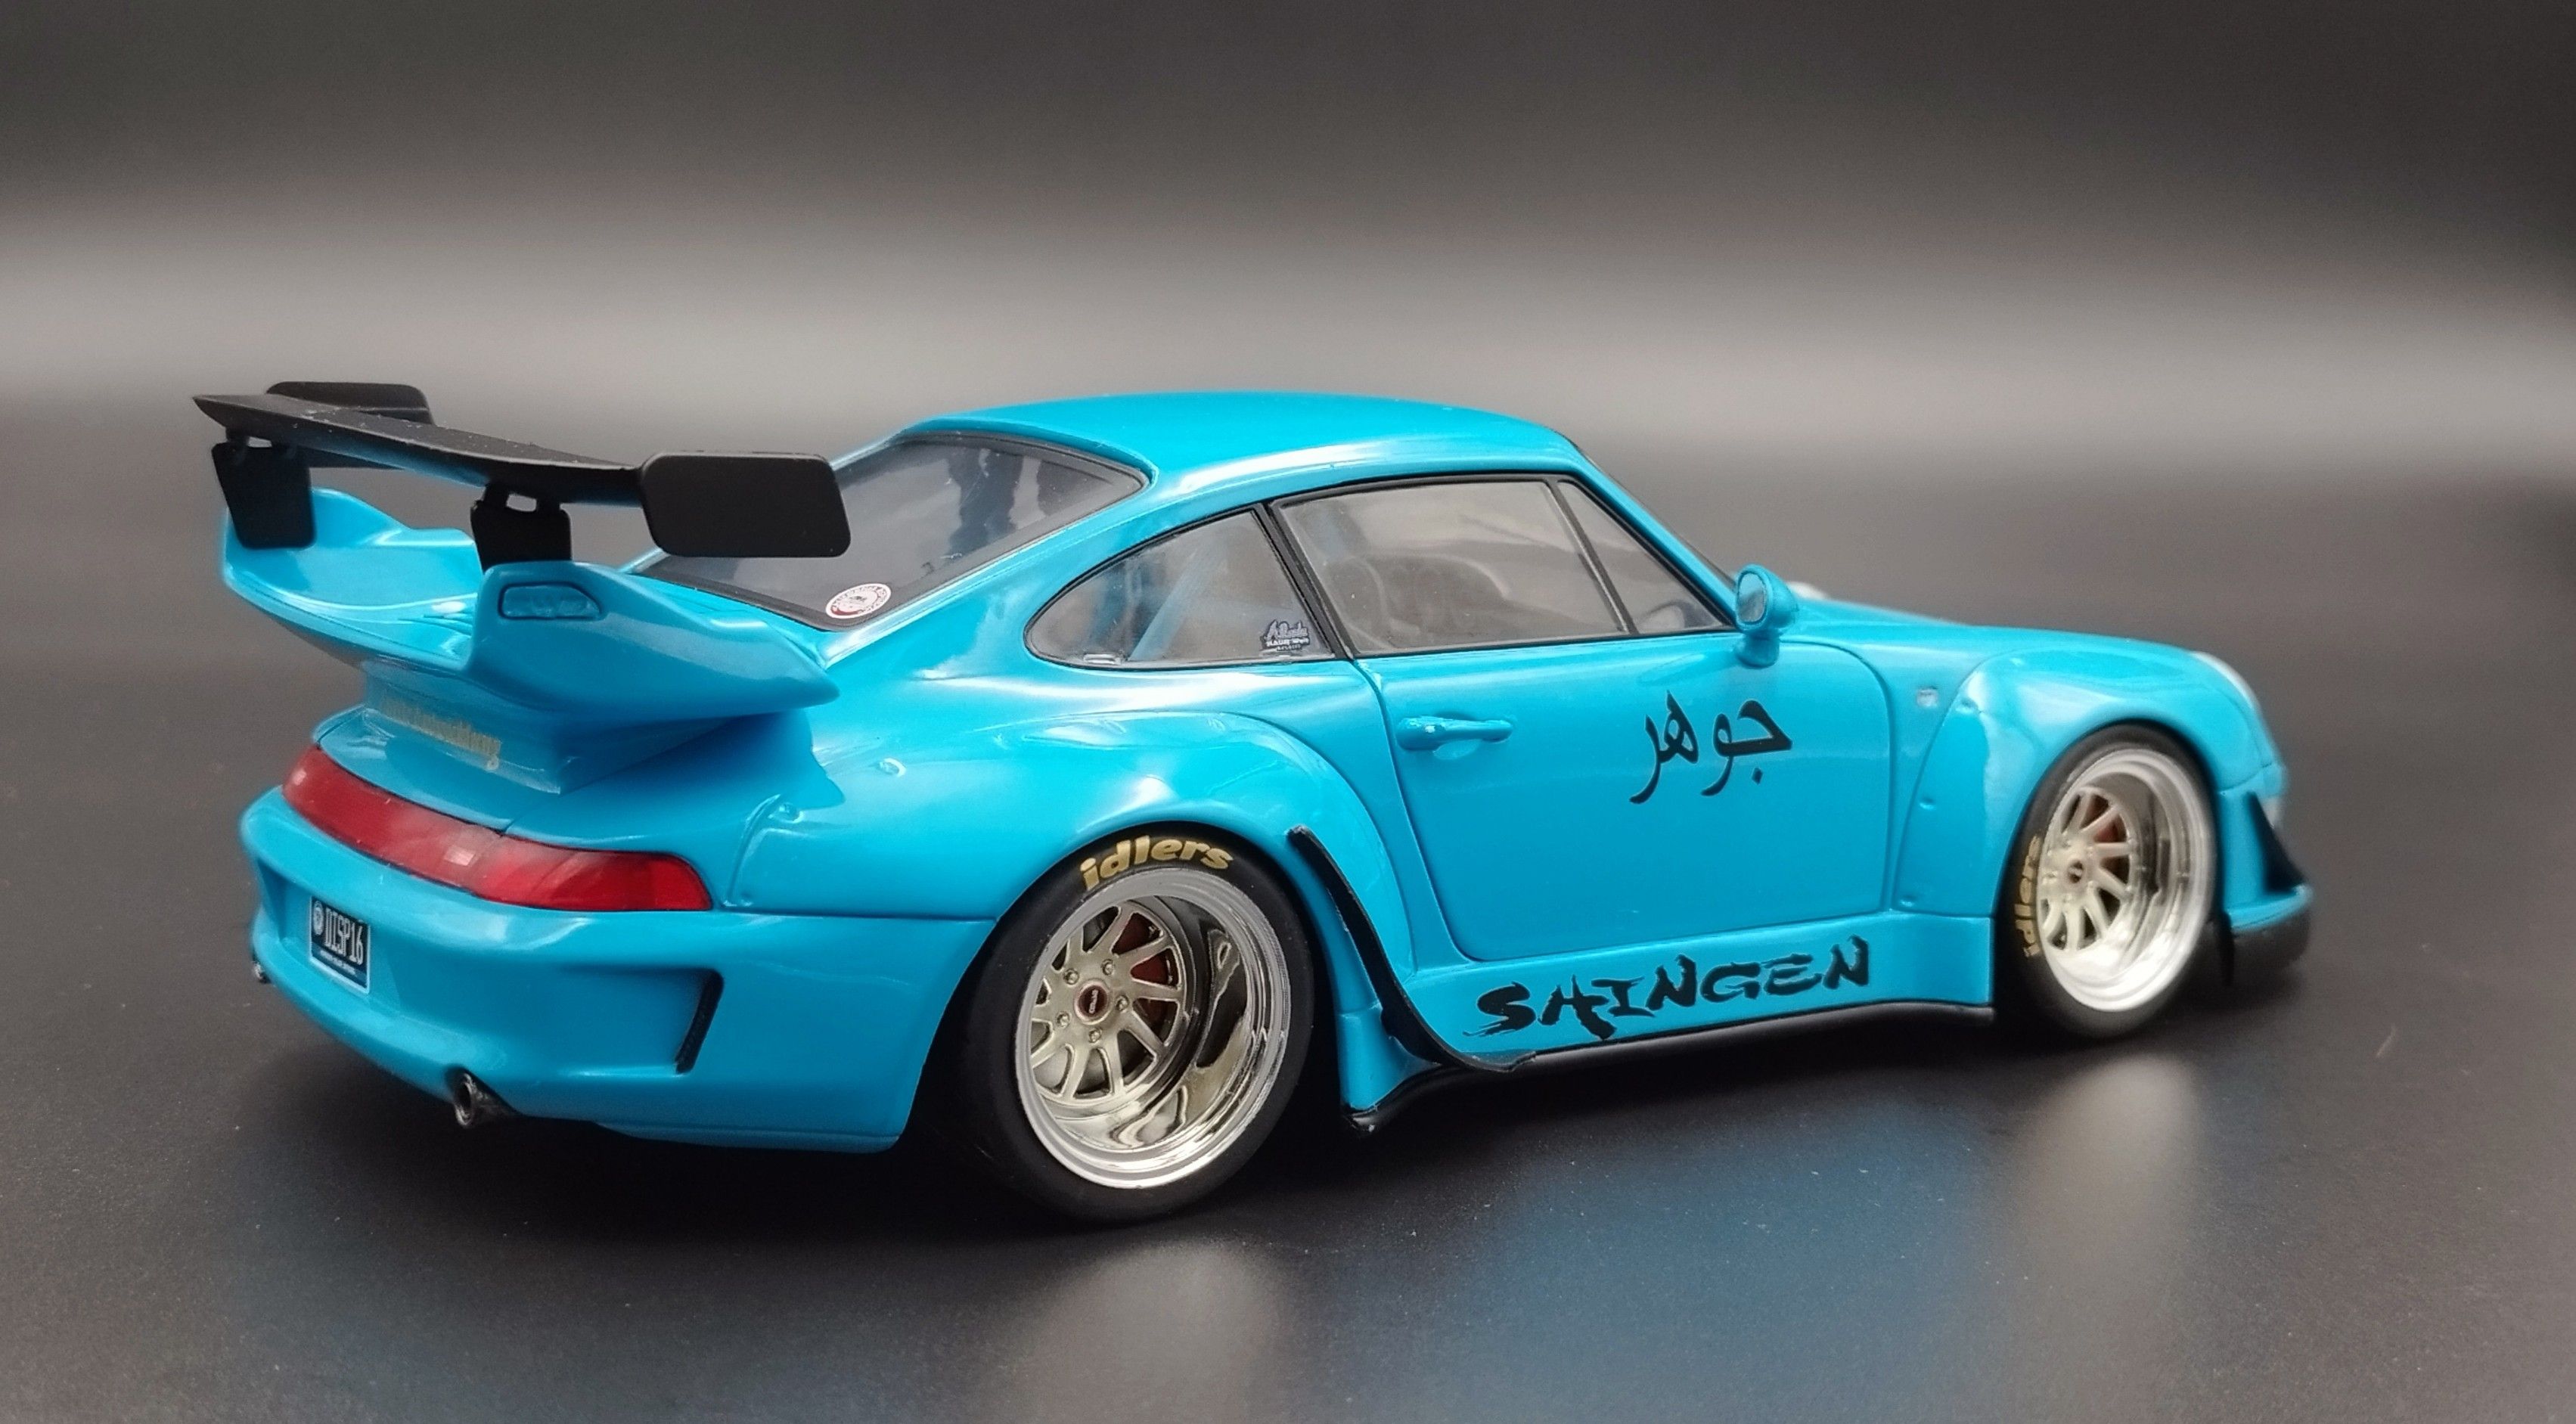 1:18 Solido Porsche 911 (993) Shingen RWB Rauh-Welt BodyKit 2018 Blue